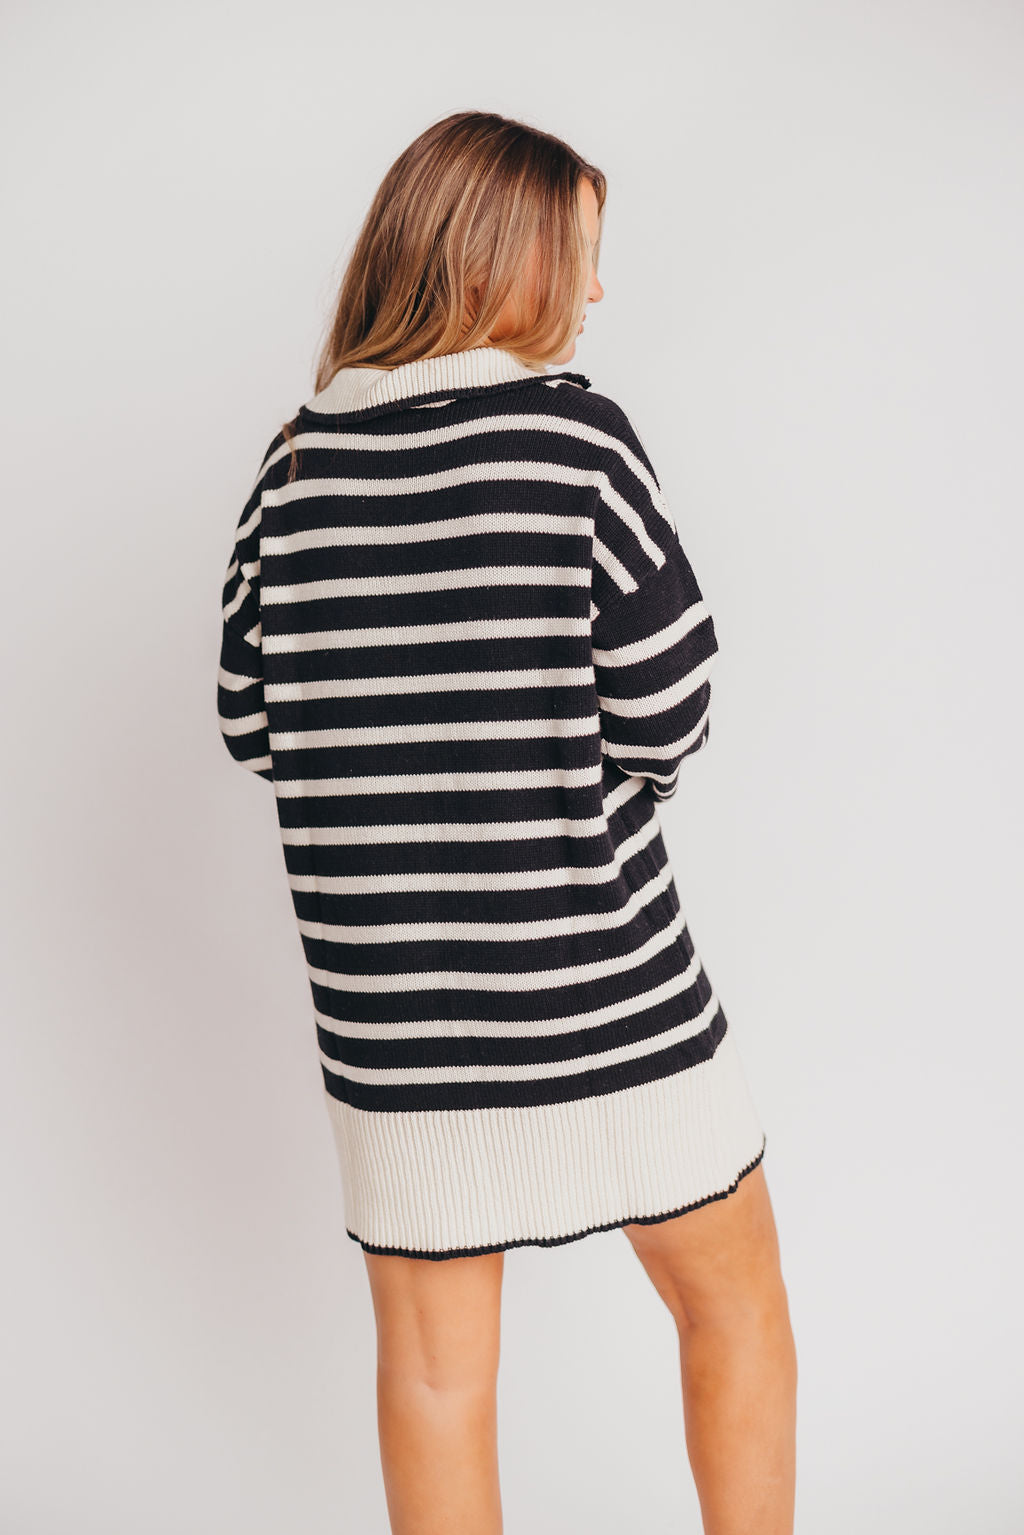 Beatrice Collared Sweater Dress in Black/Cream Stripe